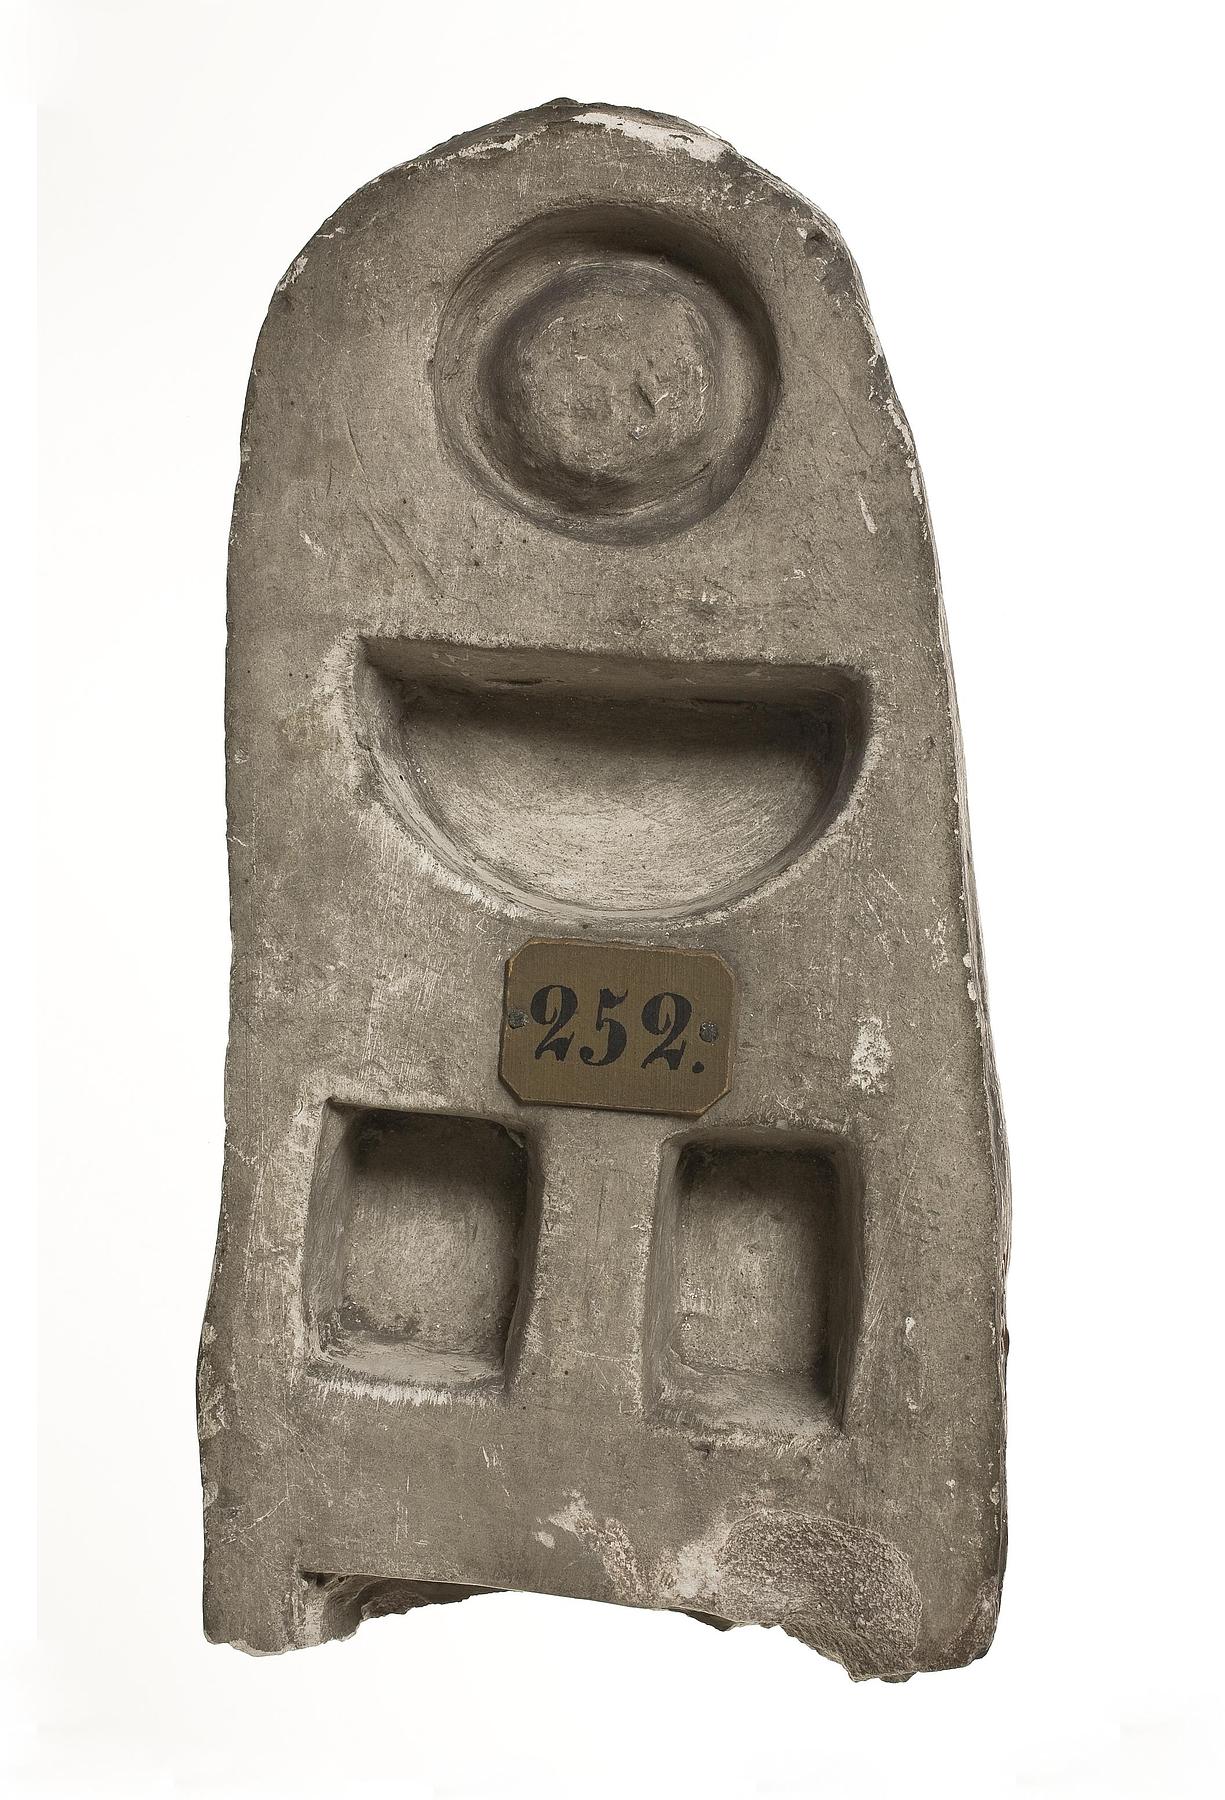 Hieroglyphic inscription, L252